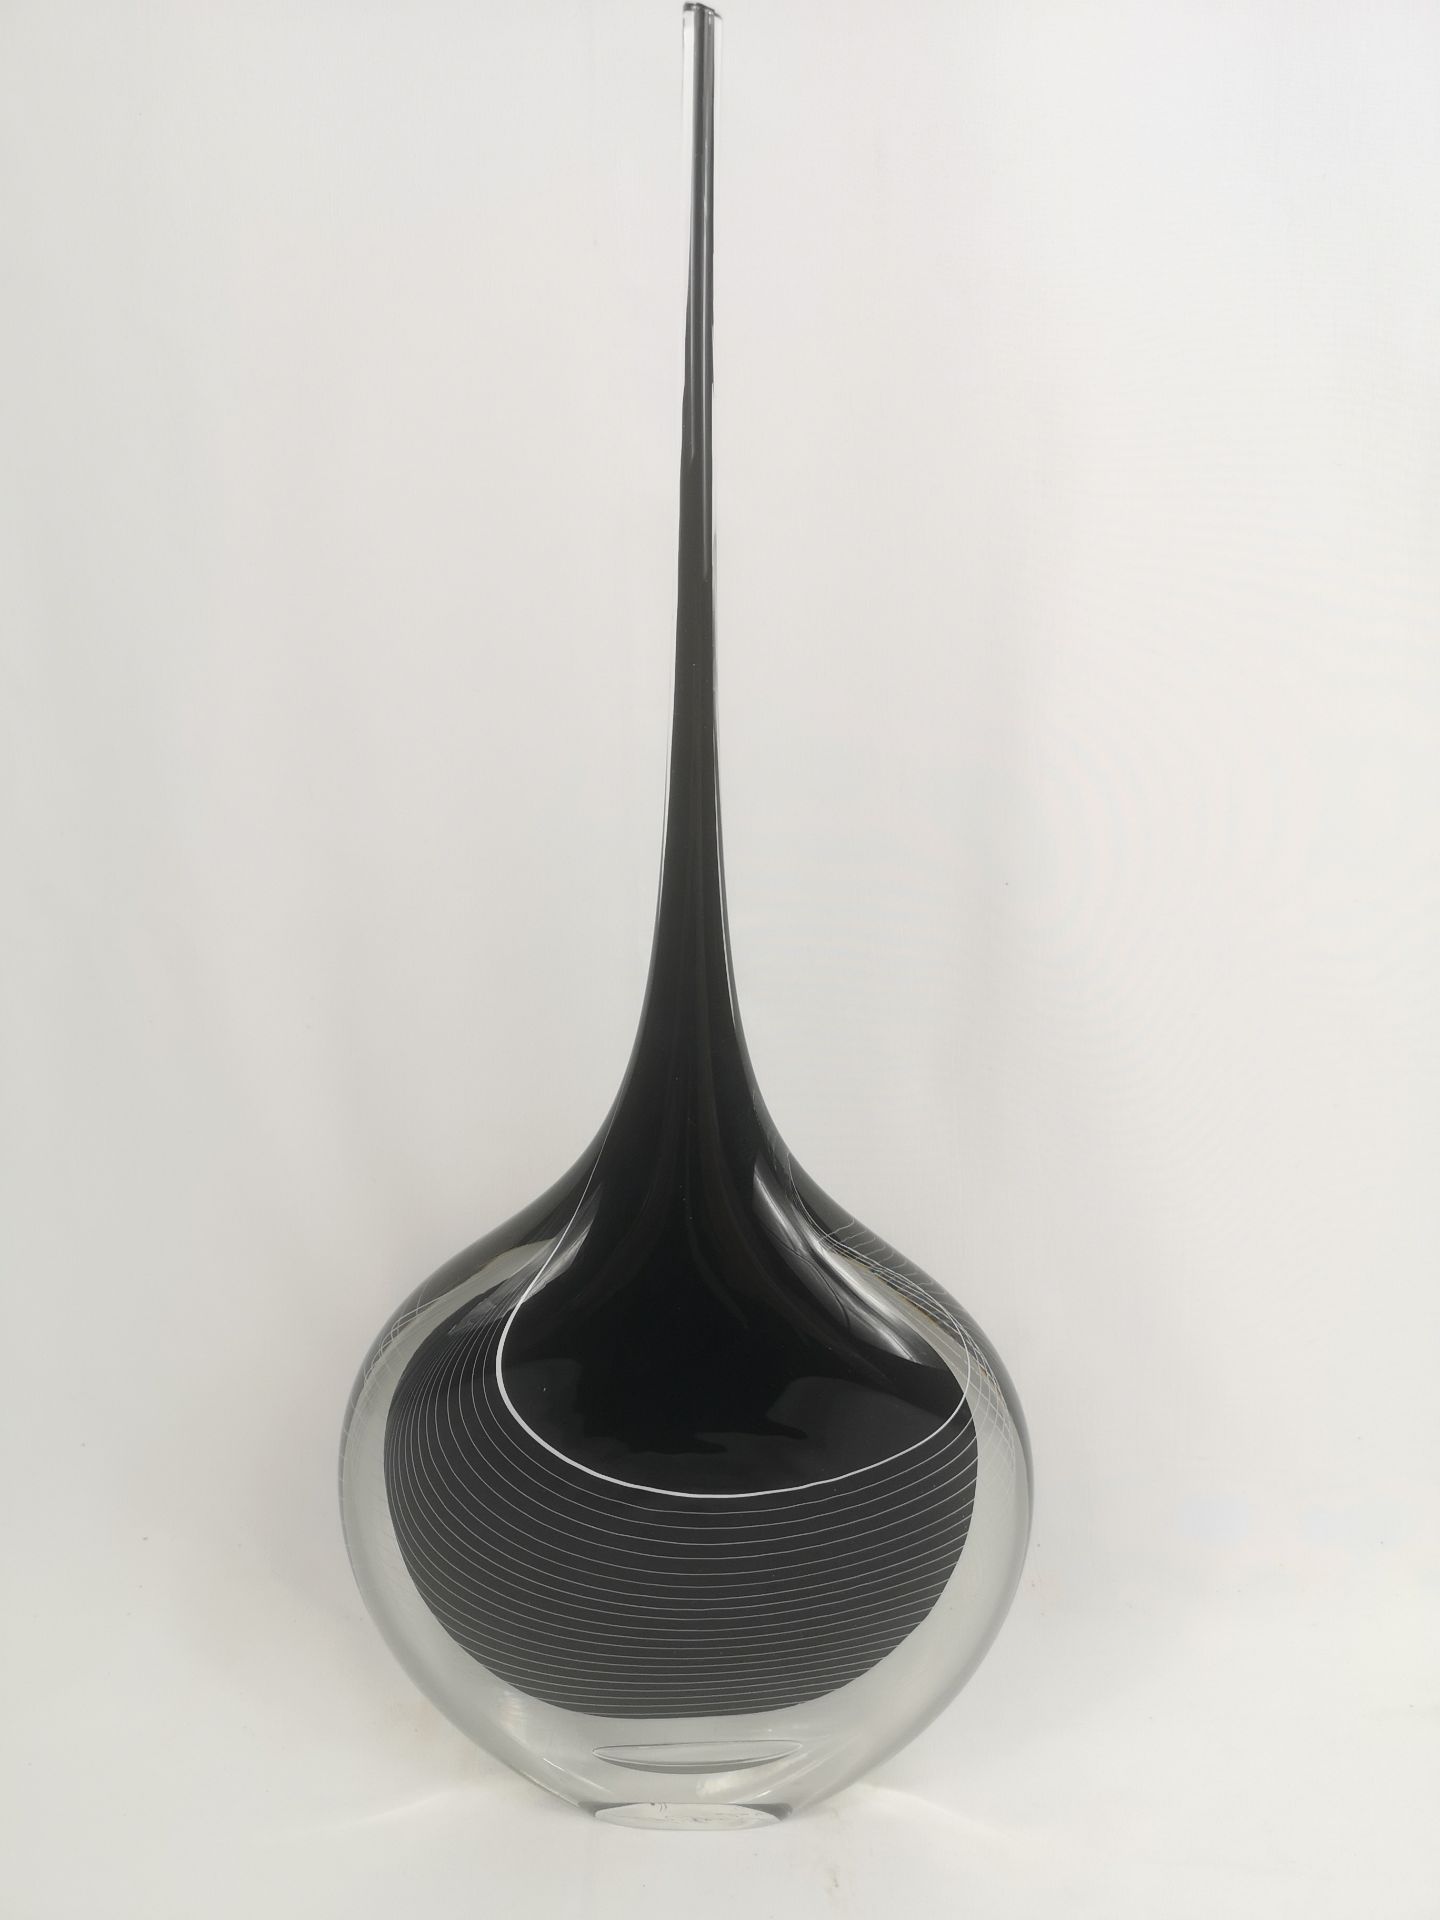 Art glass vase, signed by artist Katie Brown